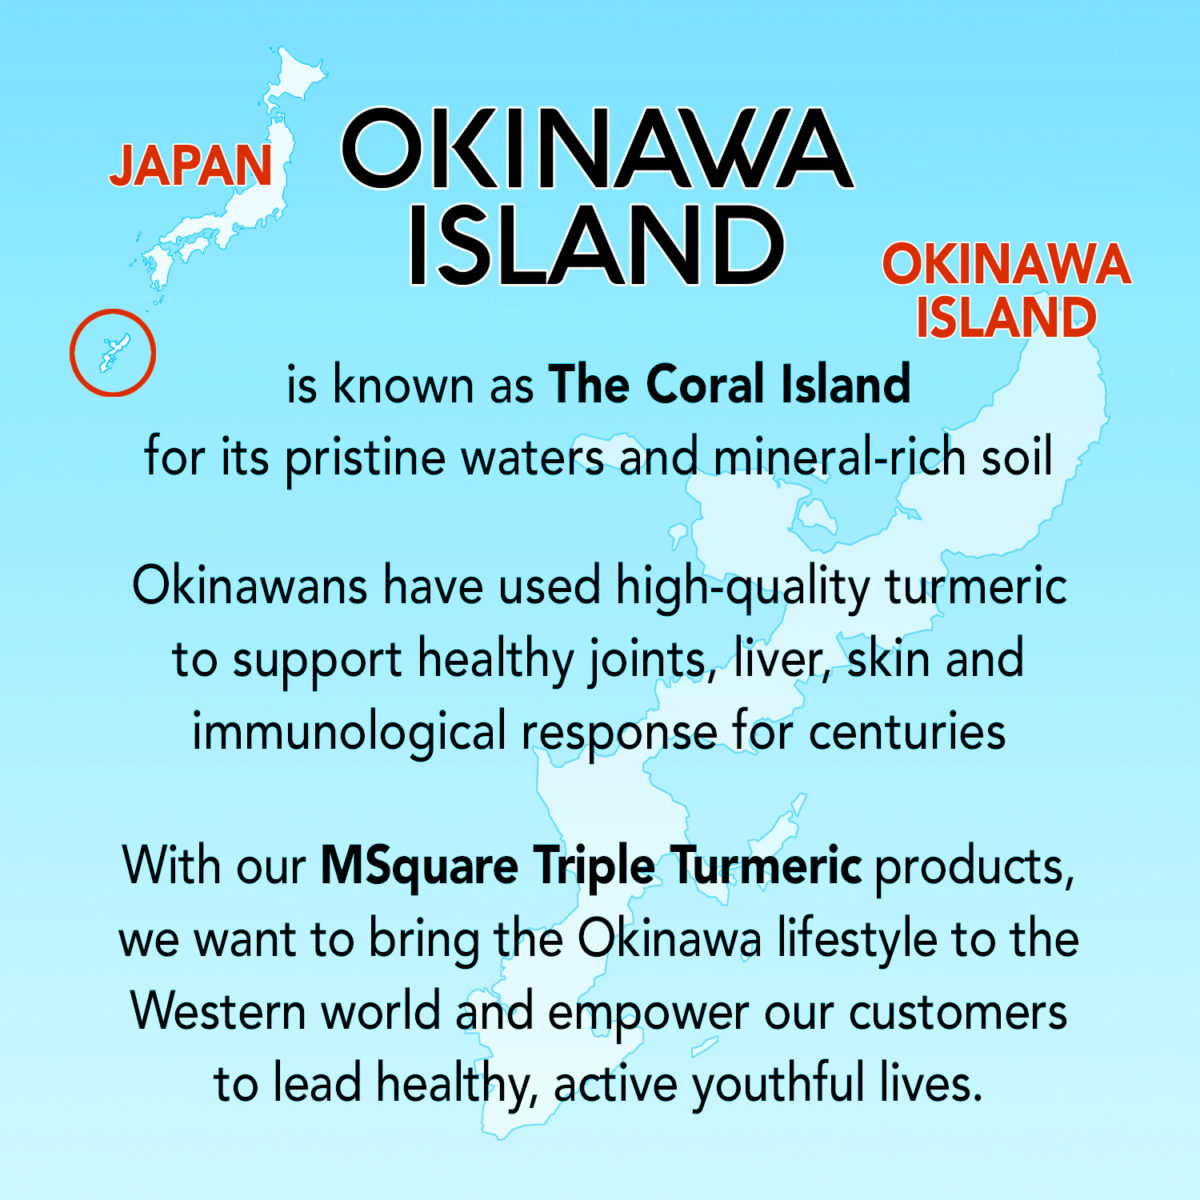 MSquare Okinawa Triple Turmeric + Okinawa Island